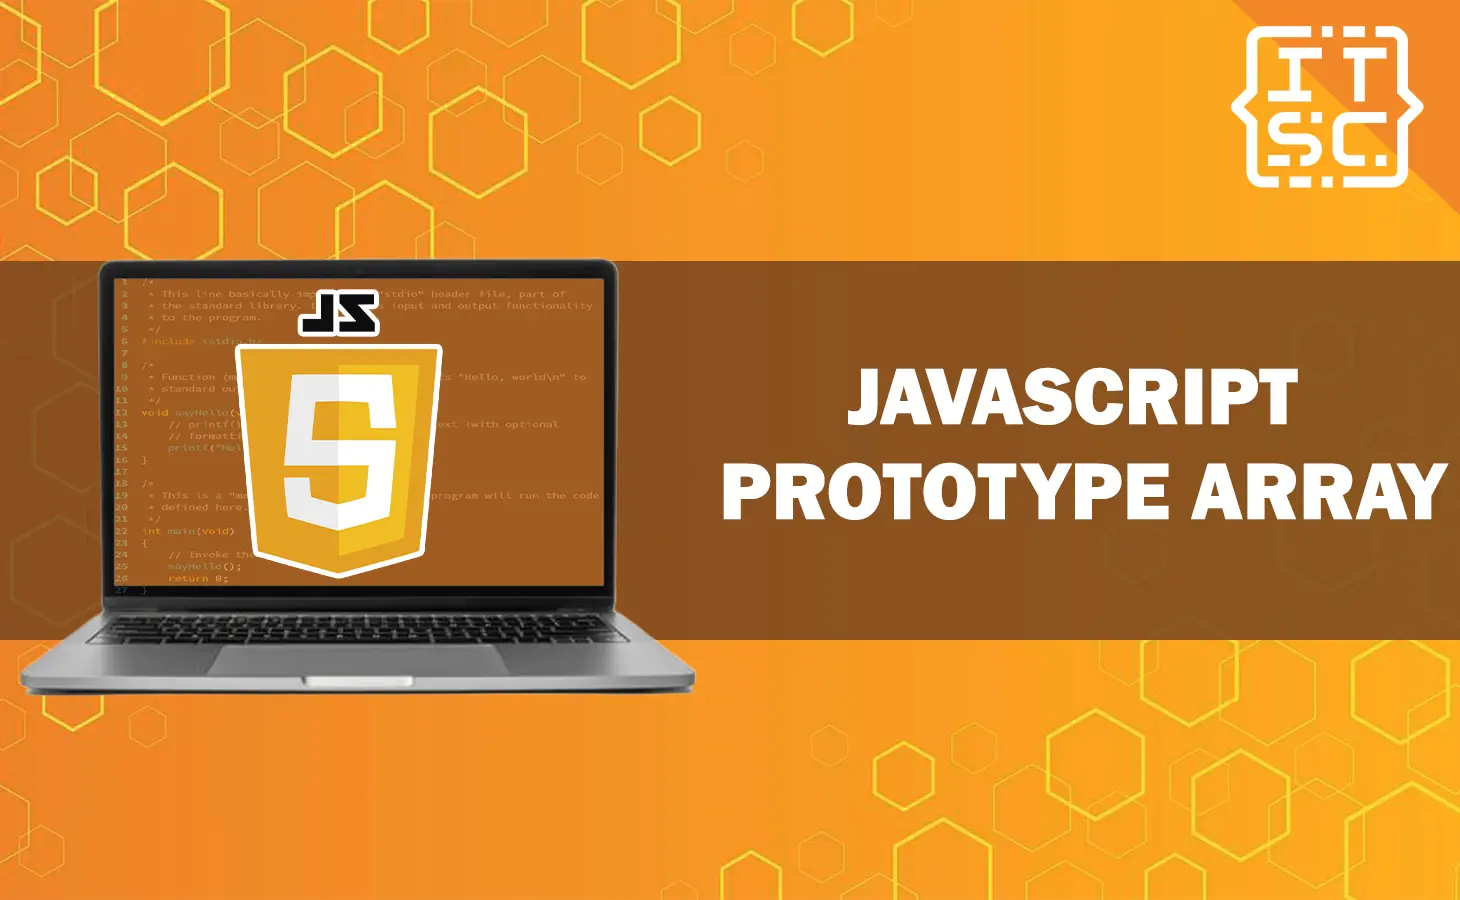 javscript prototype array